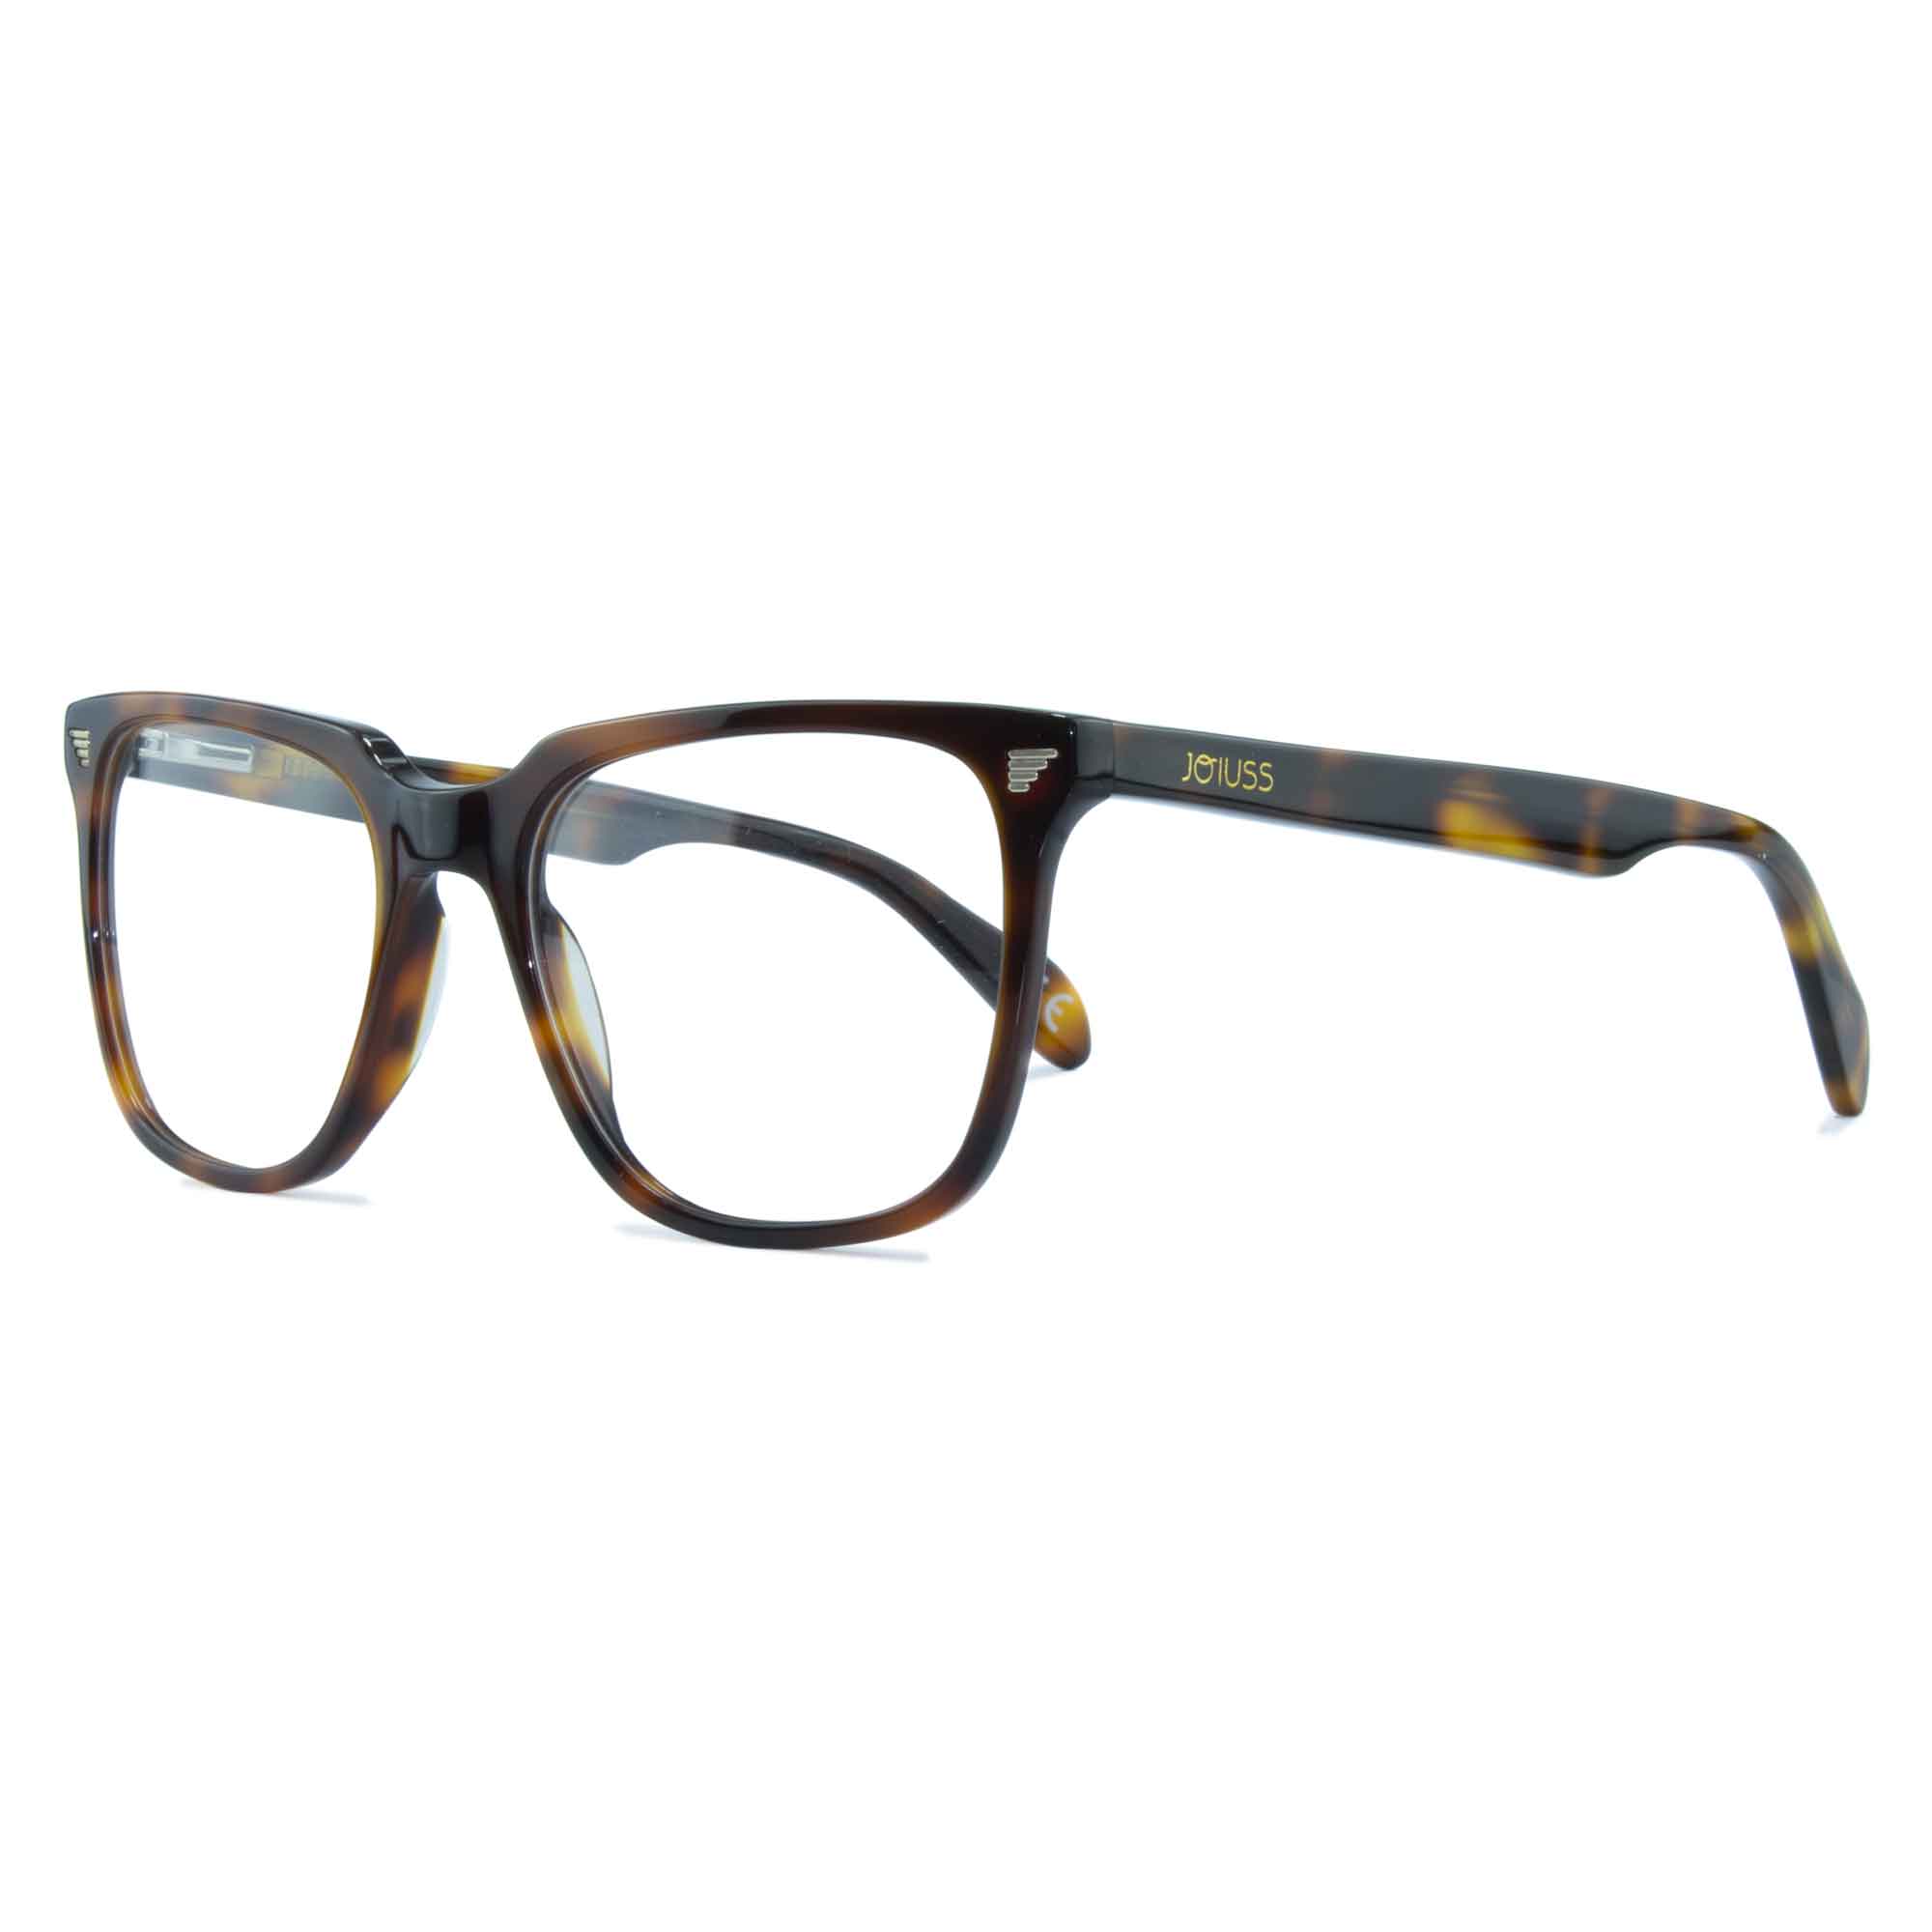 Square Glasses Frames - Tortoiseshell - Kent